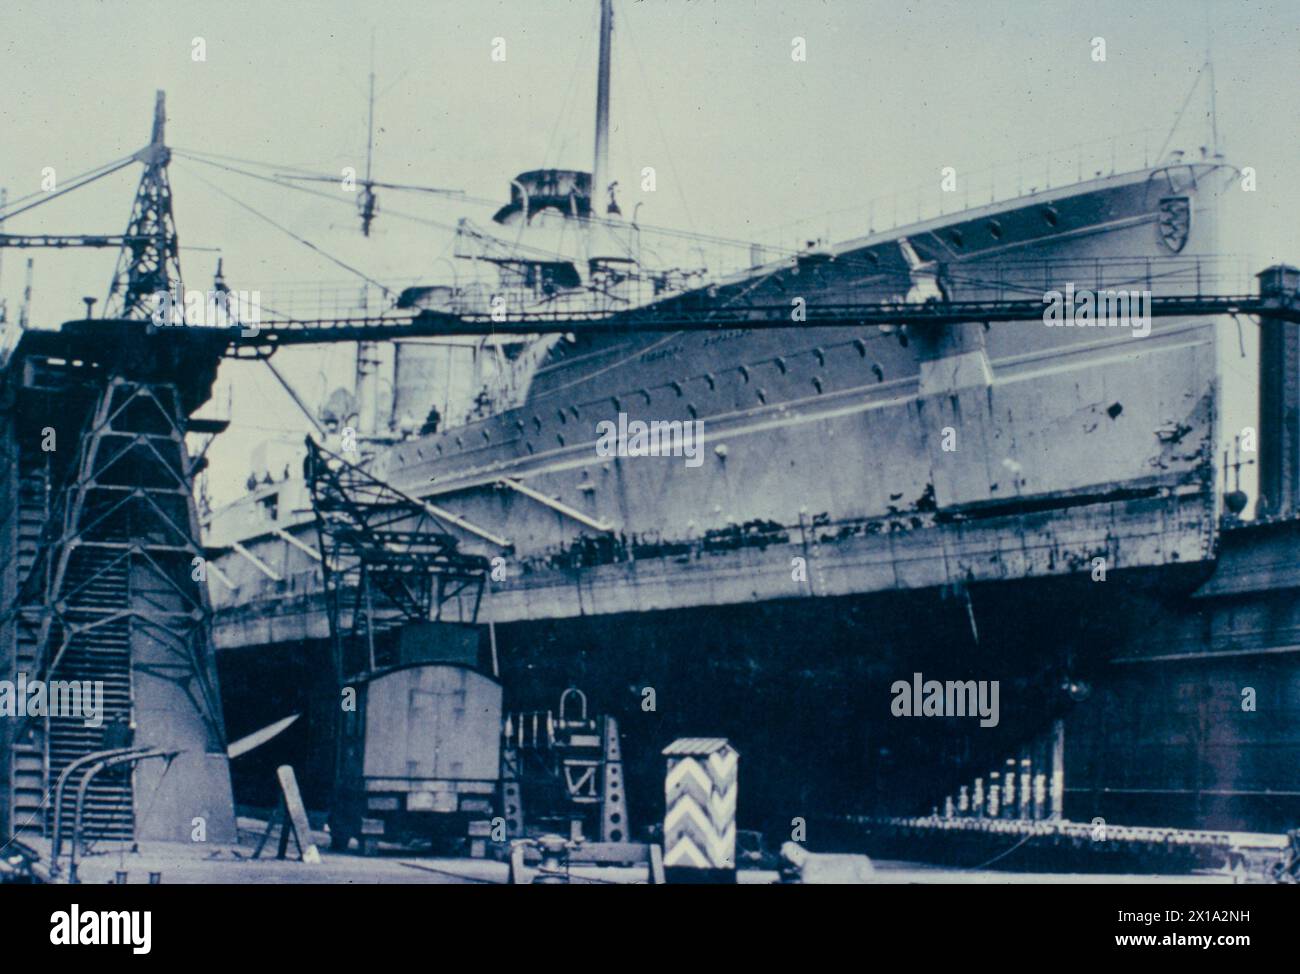 The German battleship Seydlitz in drydock at the Kaiserworks for repairs, Germany 1916 Stock Photo